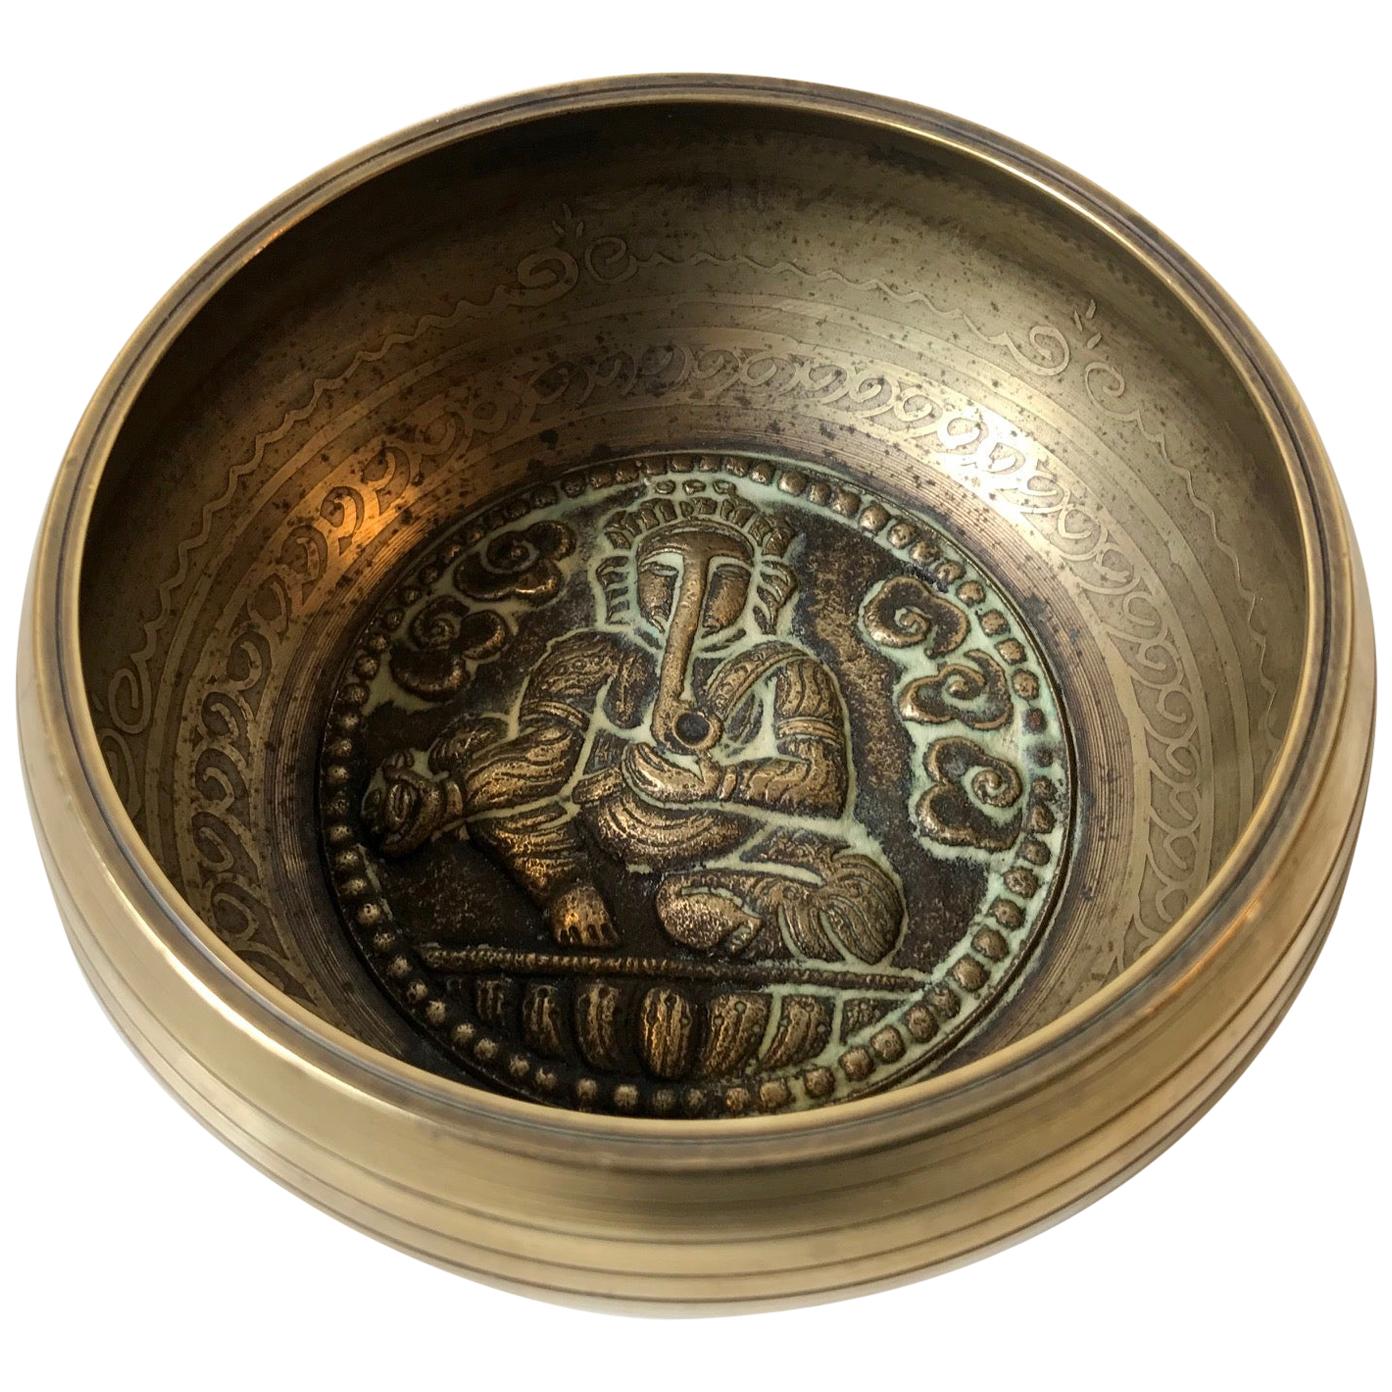 Antique Tibetan Brass Meditation Bowl with Ganesha, circa 1900